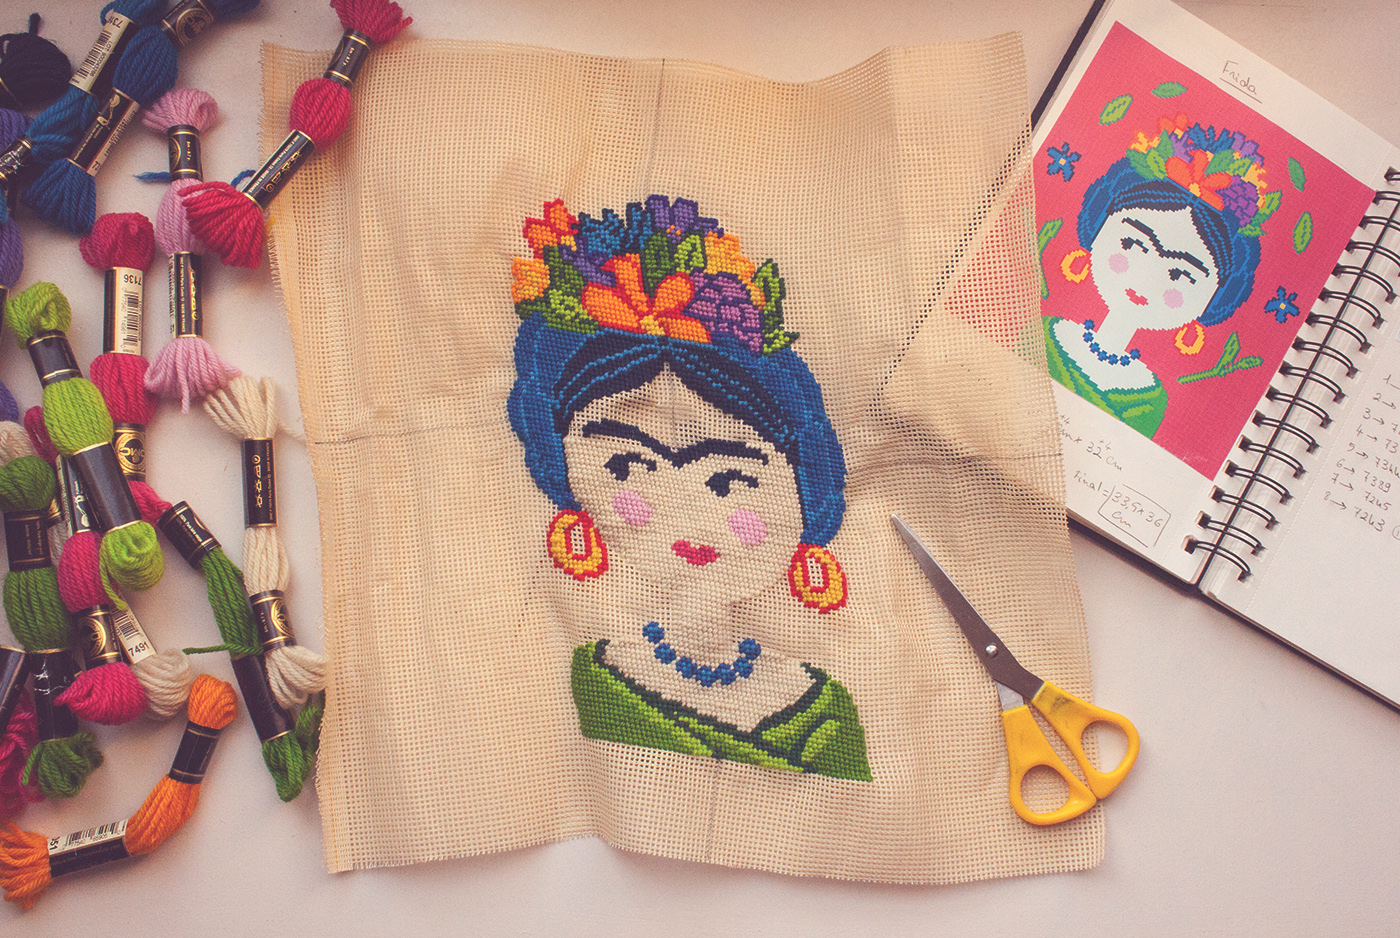 Embroidery frida kahlo canevas canvas handmade colorful mexico Mexican artist painter egypt cairo color art